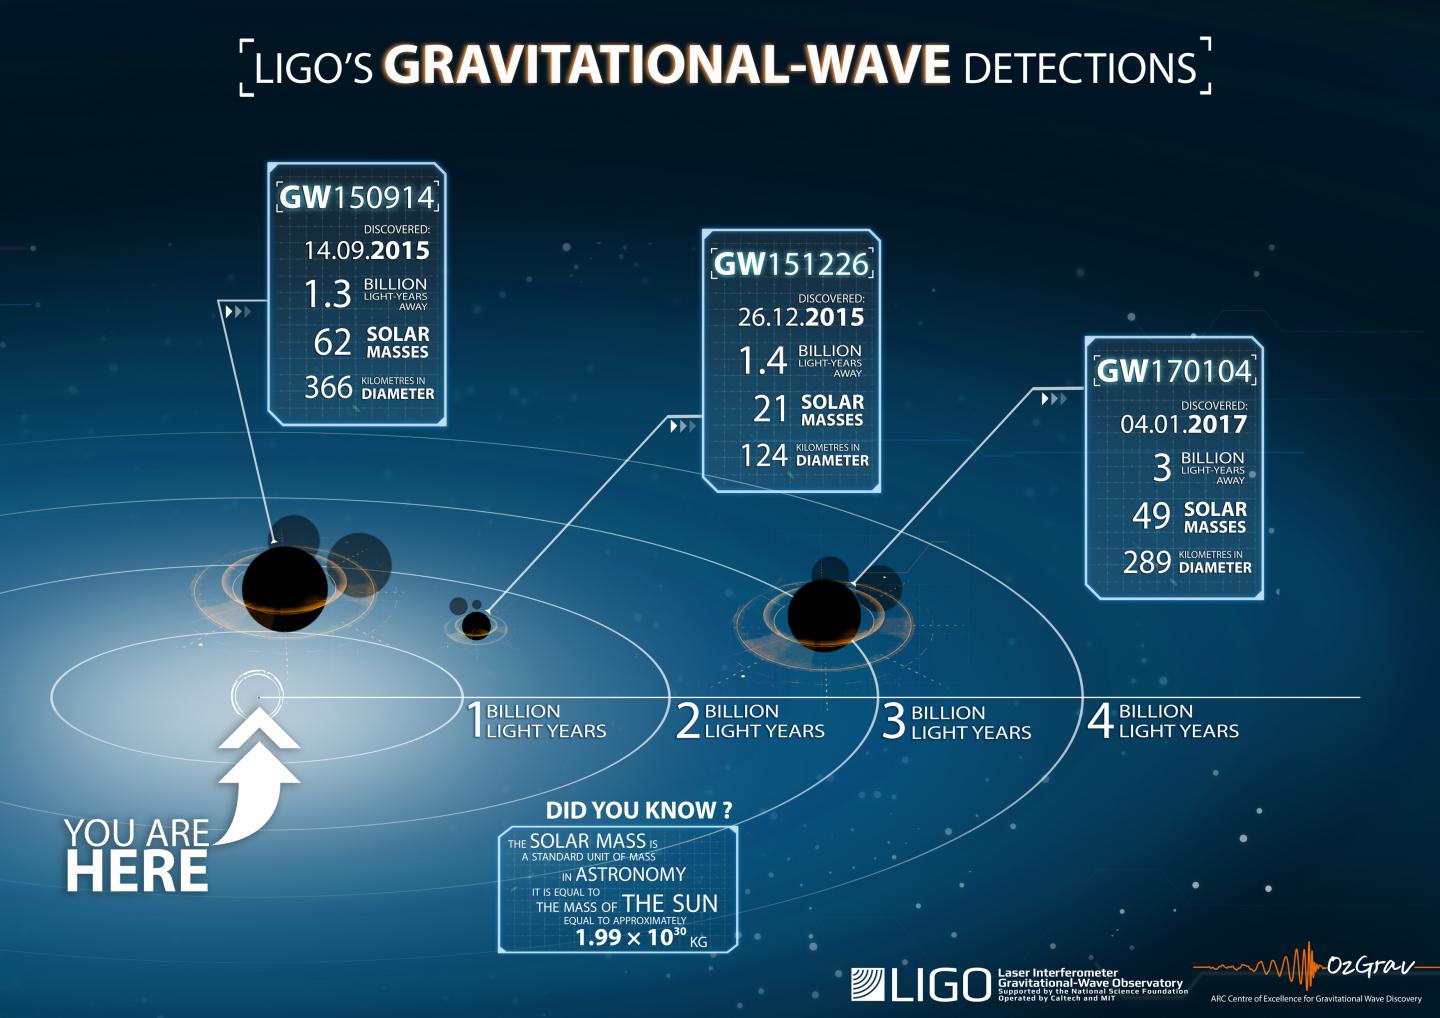 Ligo's Gravitational Wave Detections